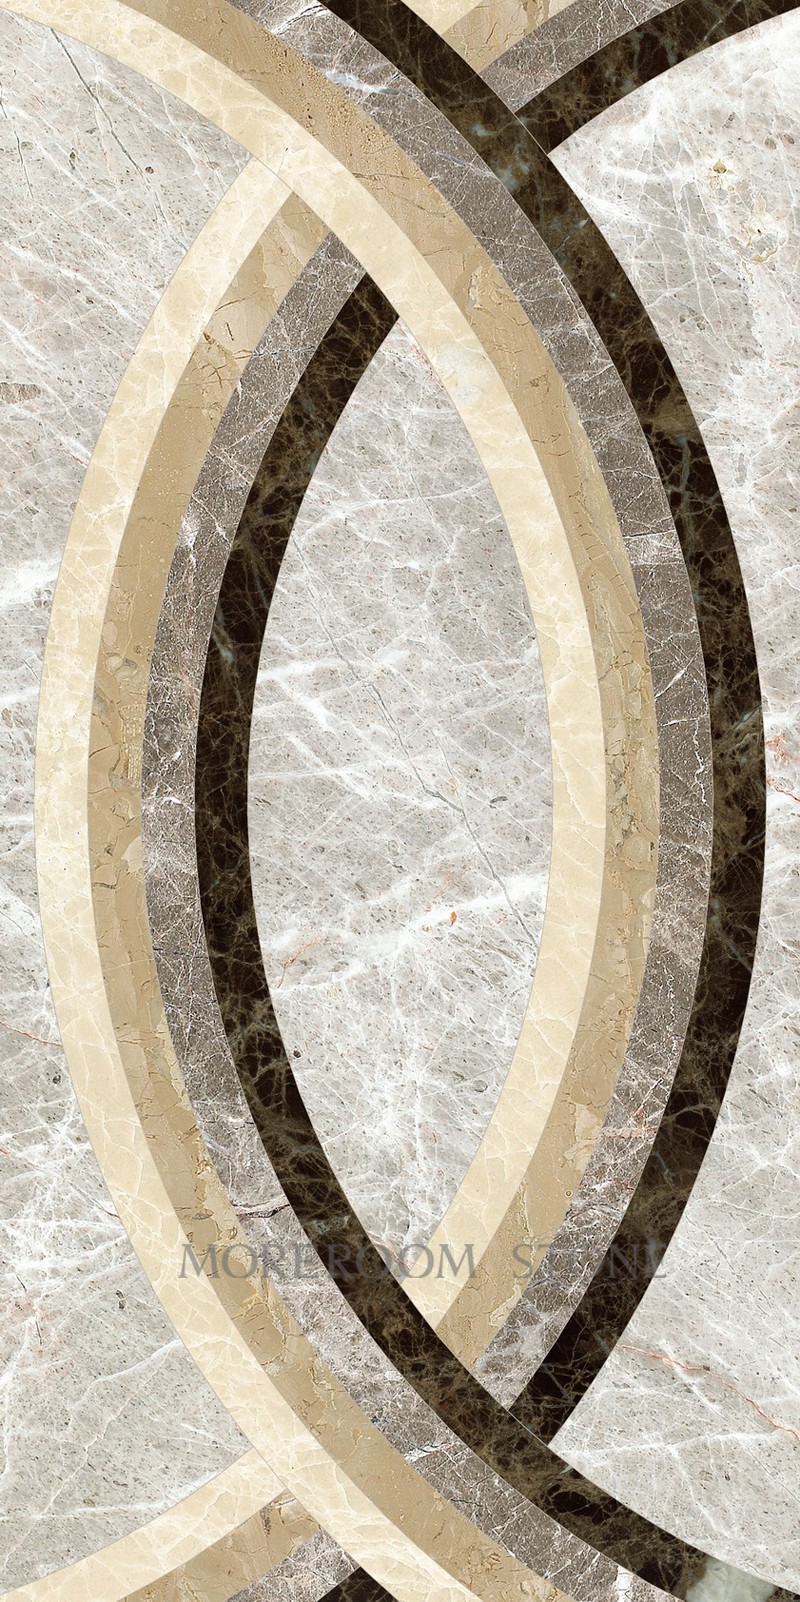 MPE09G63 Moreroom Stone Polished Greece Marble Tiles Price Waterjet Marble Grey Marble Tiles Marble Floor Marble Wall Tiles Design Marble Inlay 01.jpg